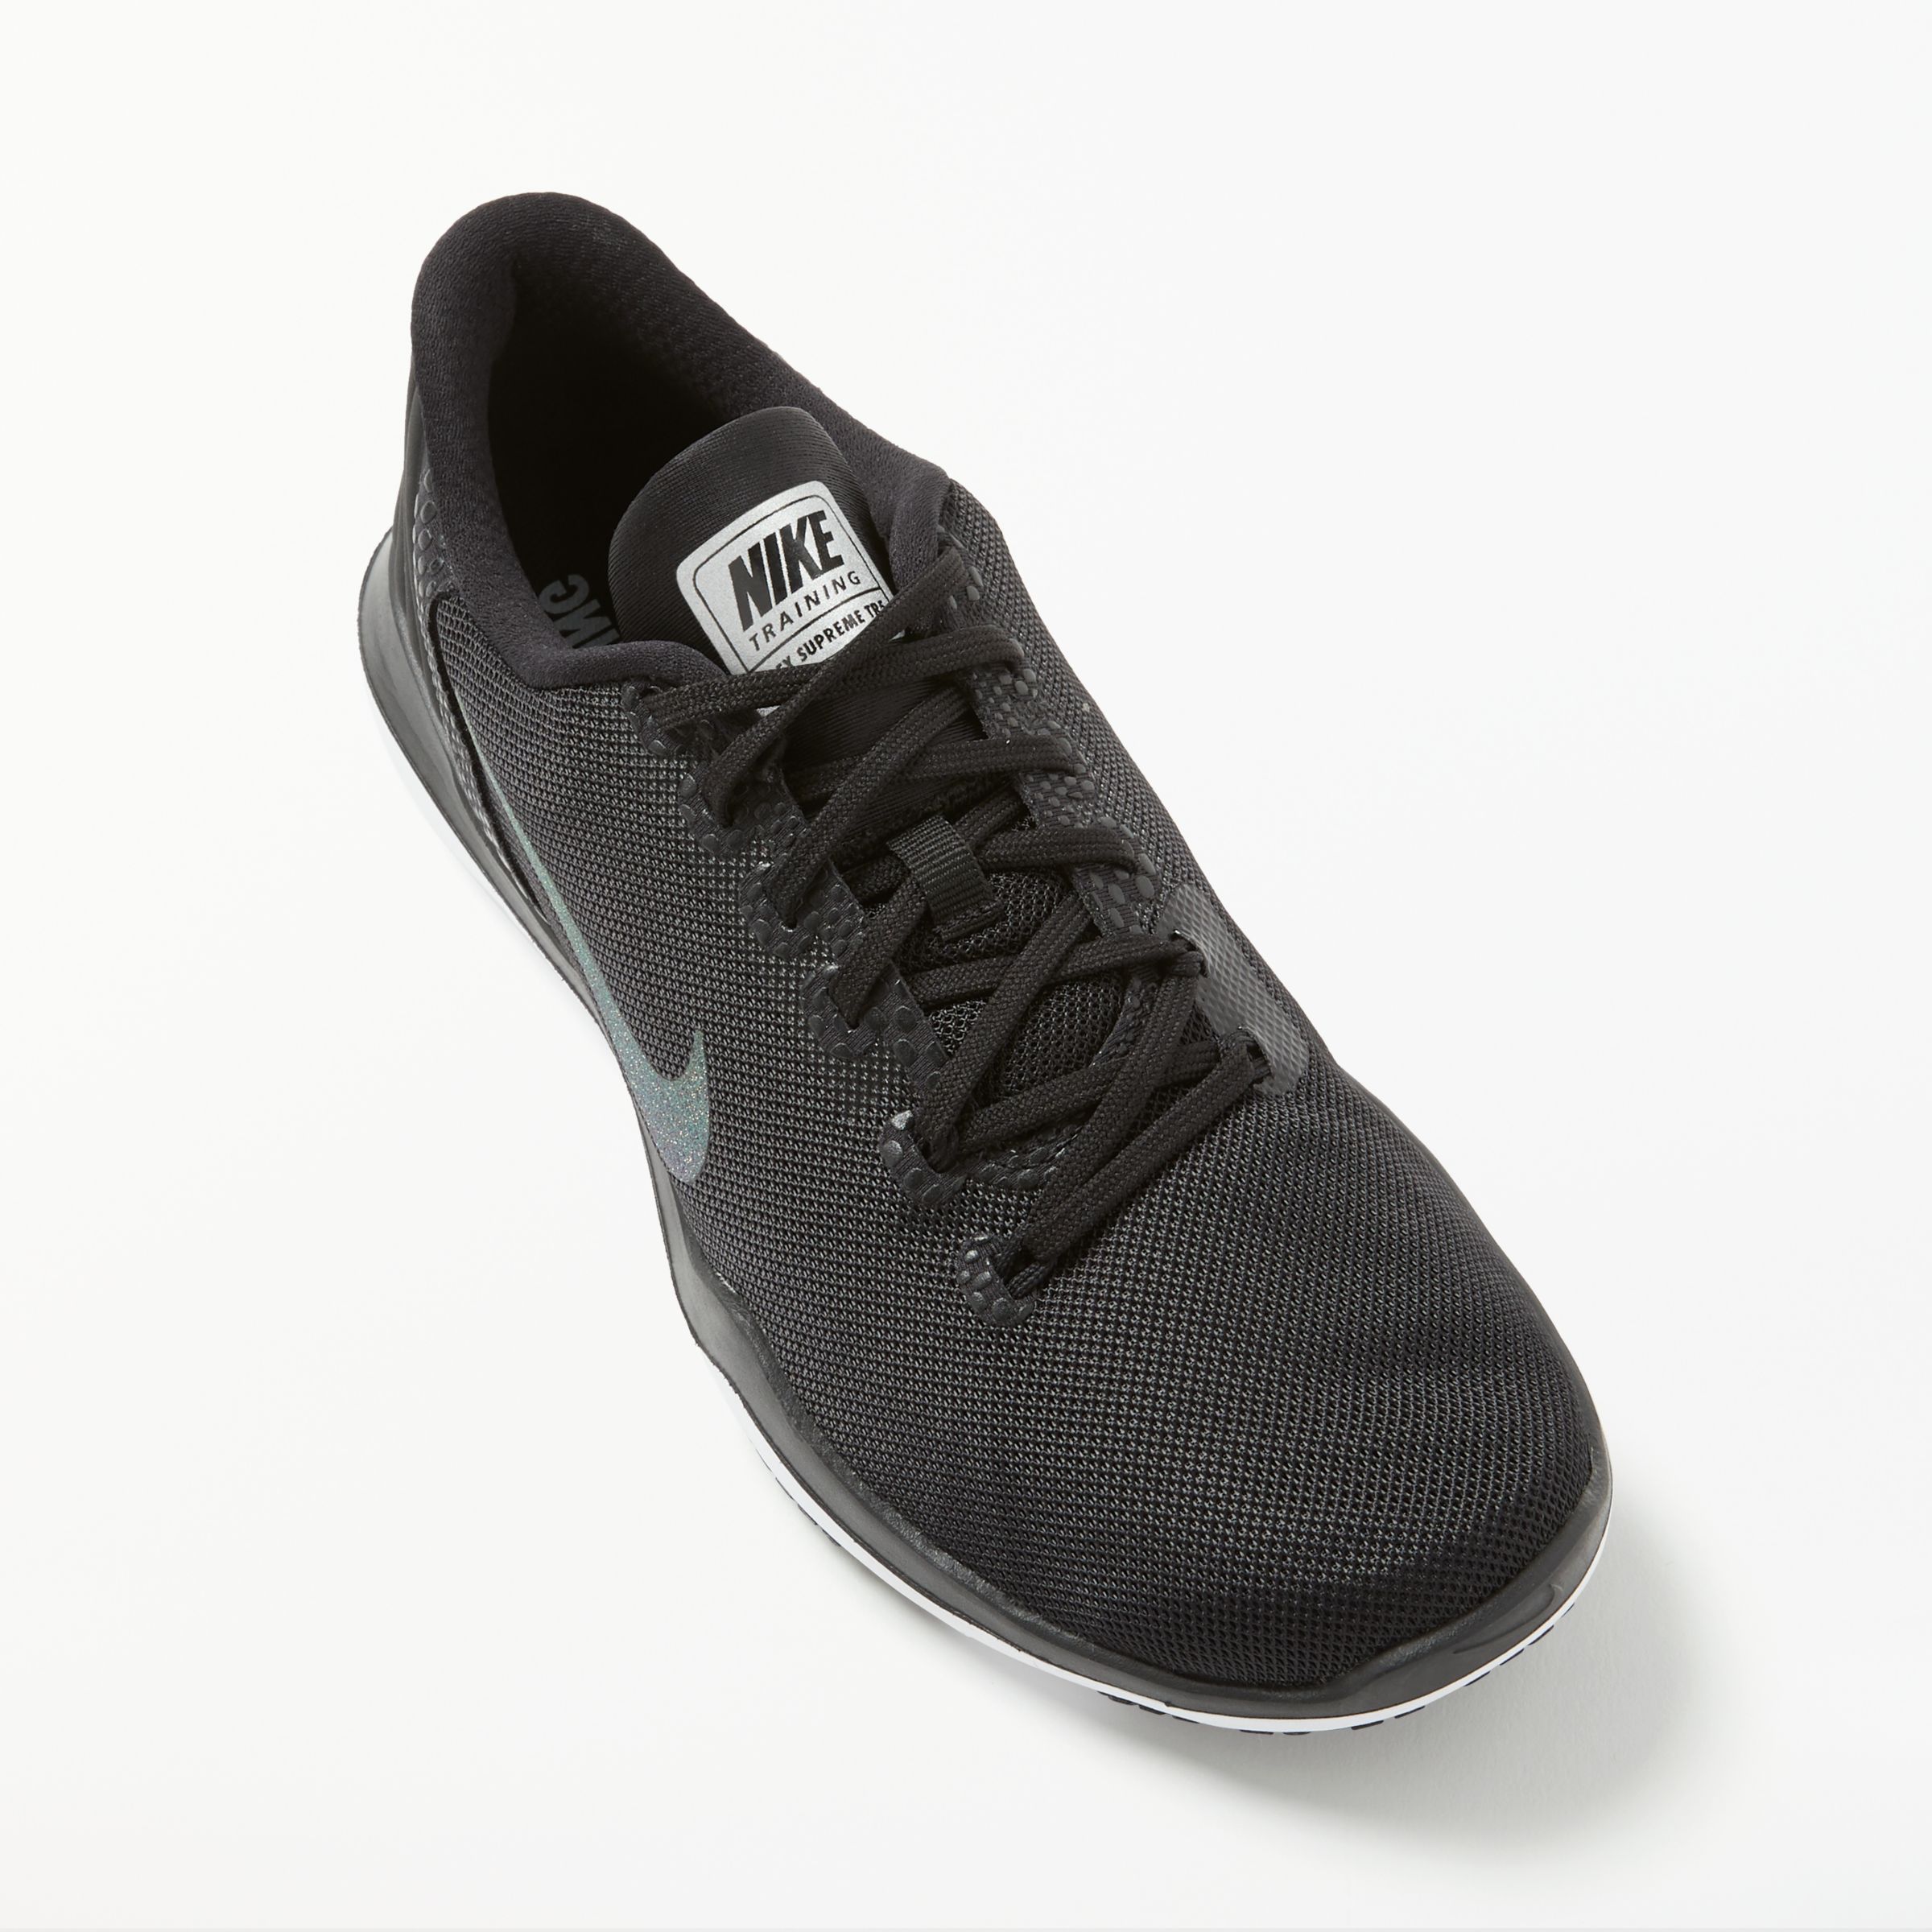 Nike Flex TR 5 Metallic Women's Training Shoes, Black/Grey